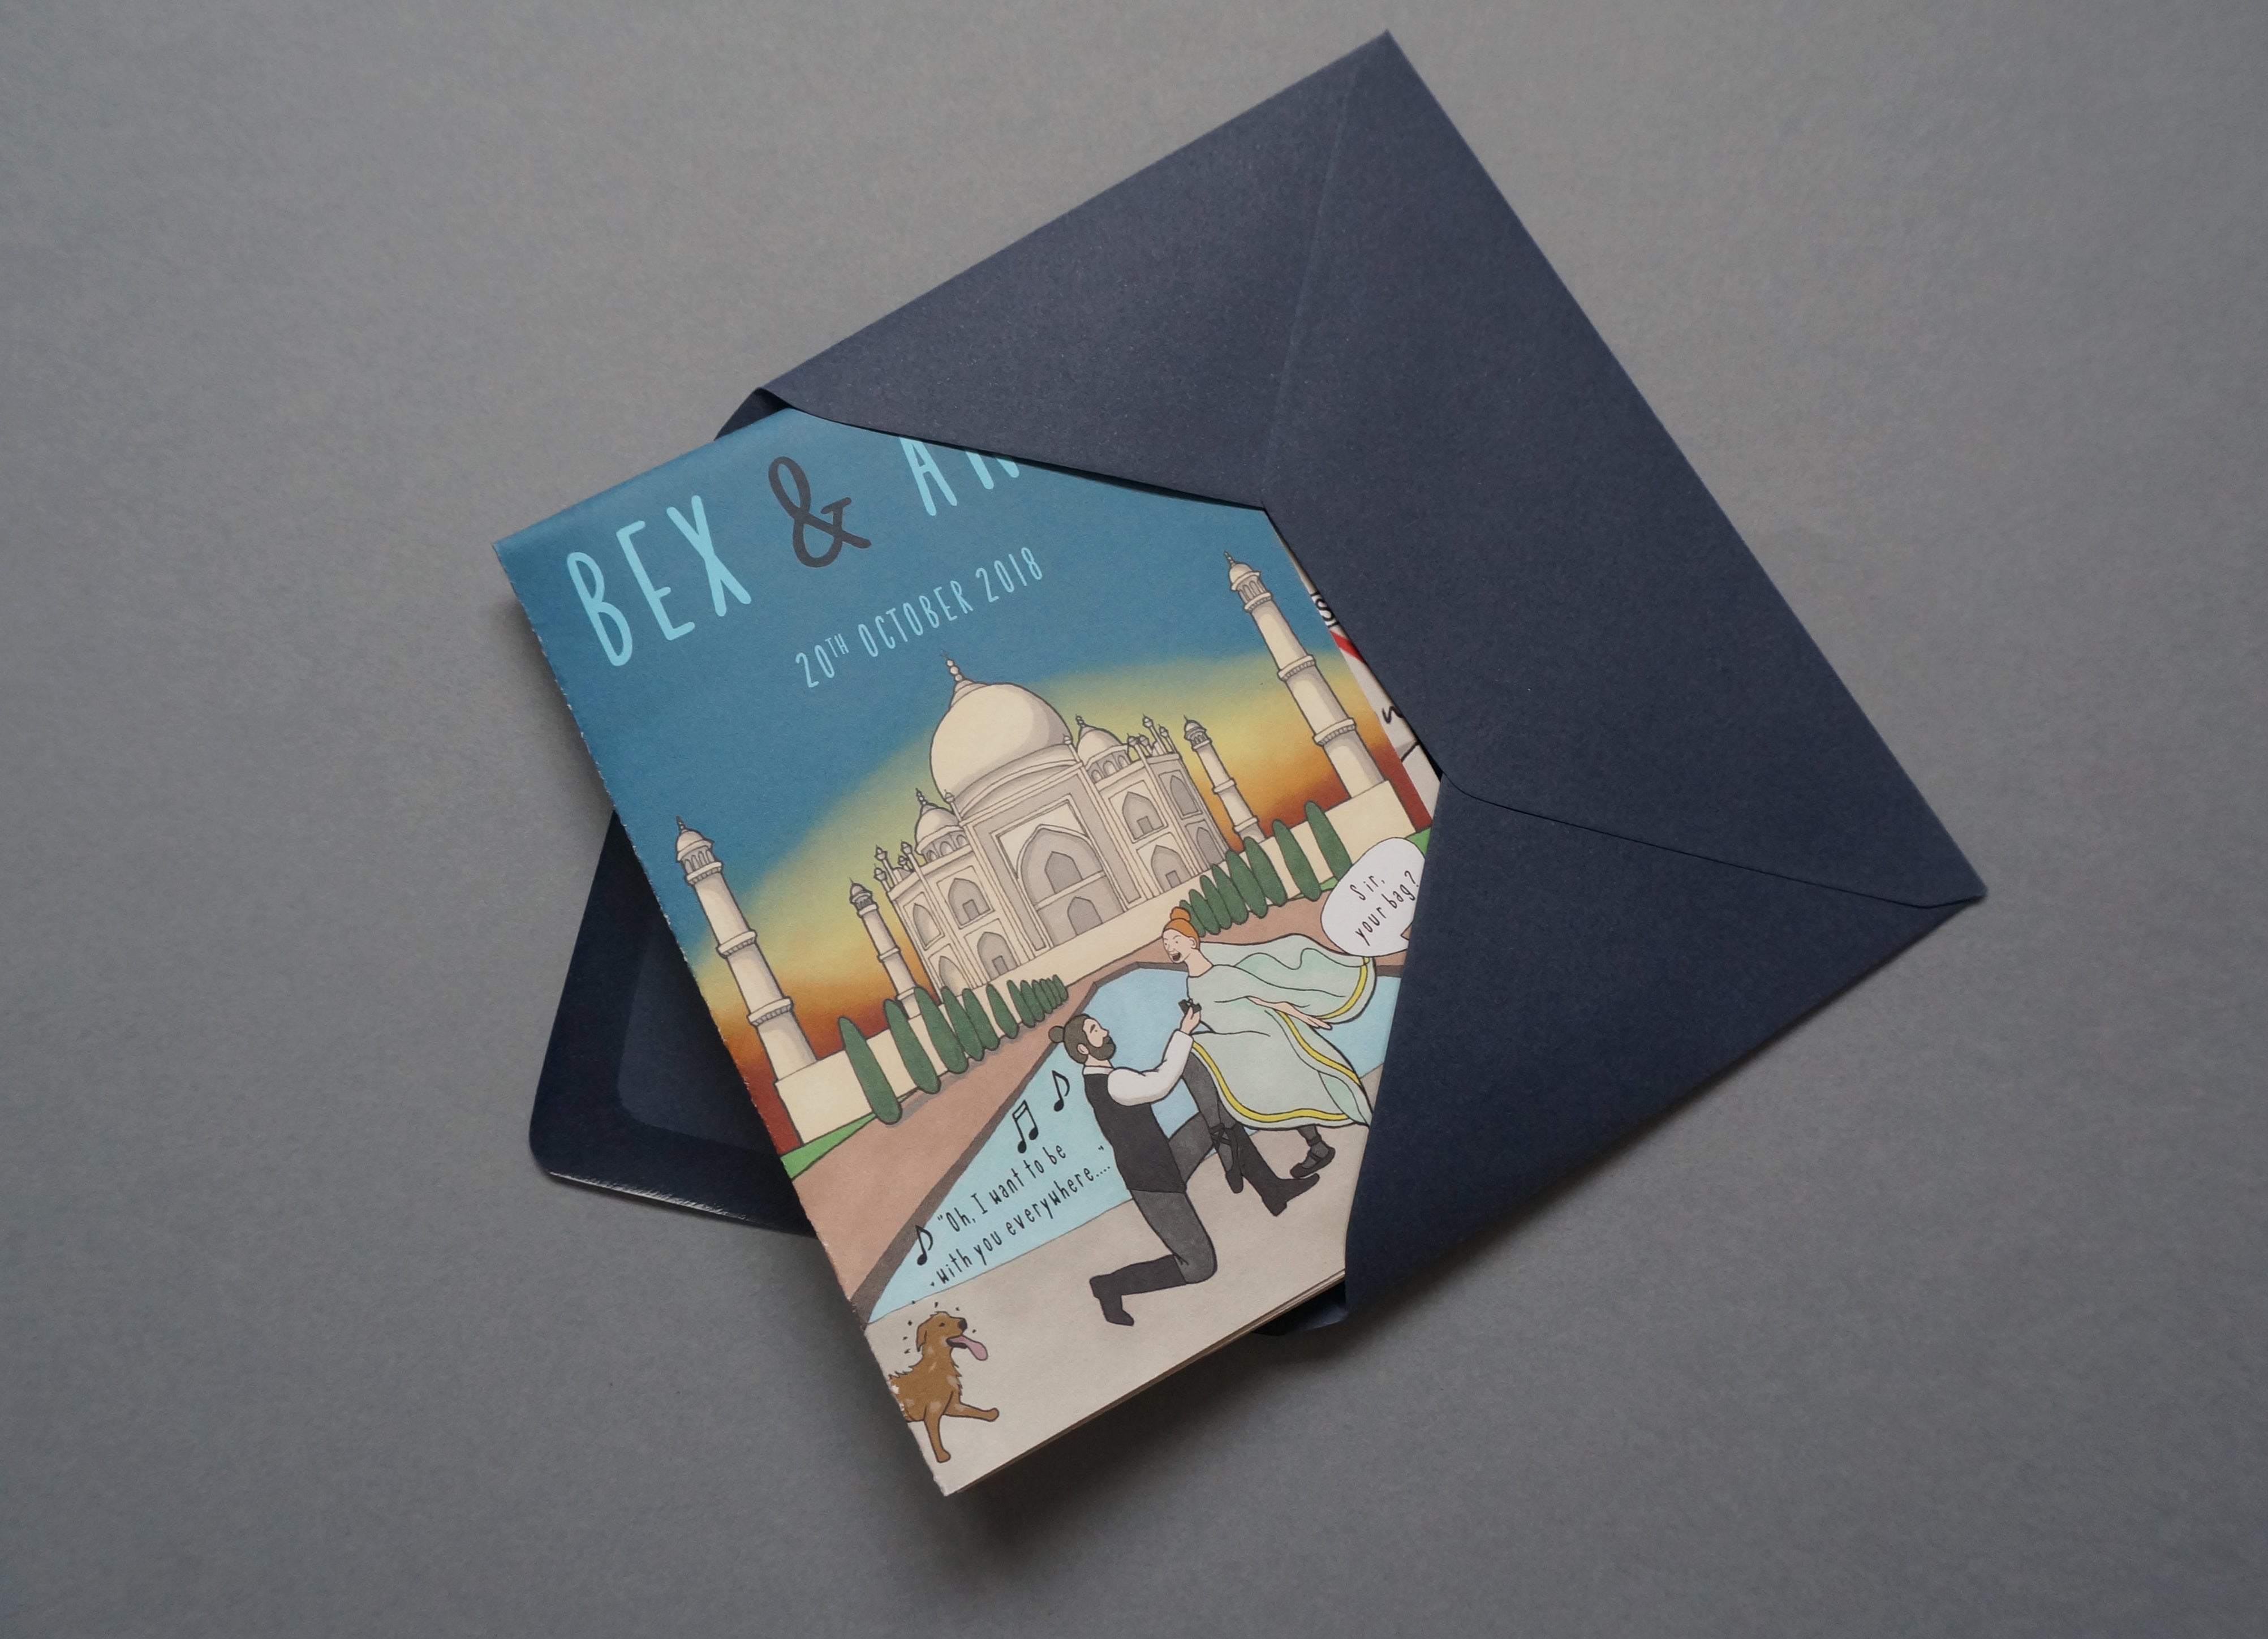 Wedding invitation in a dark blue envelope, with an alternative couple portrait.